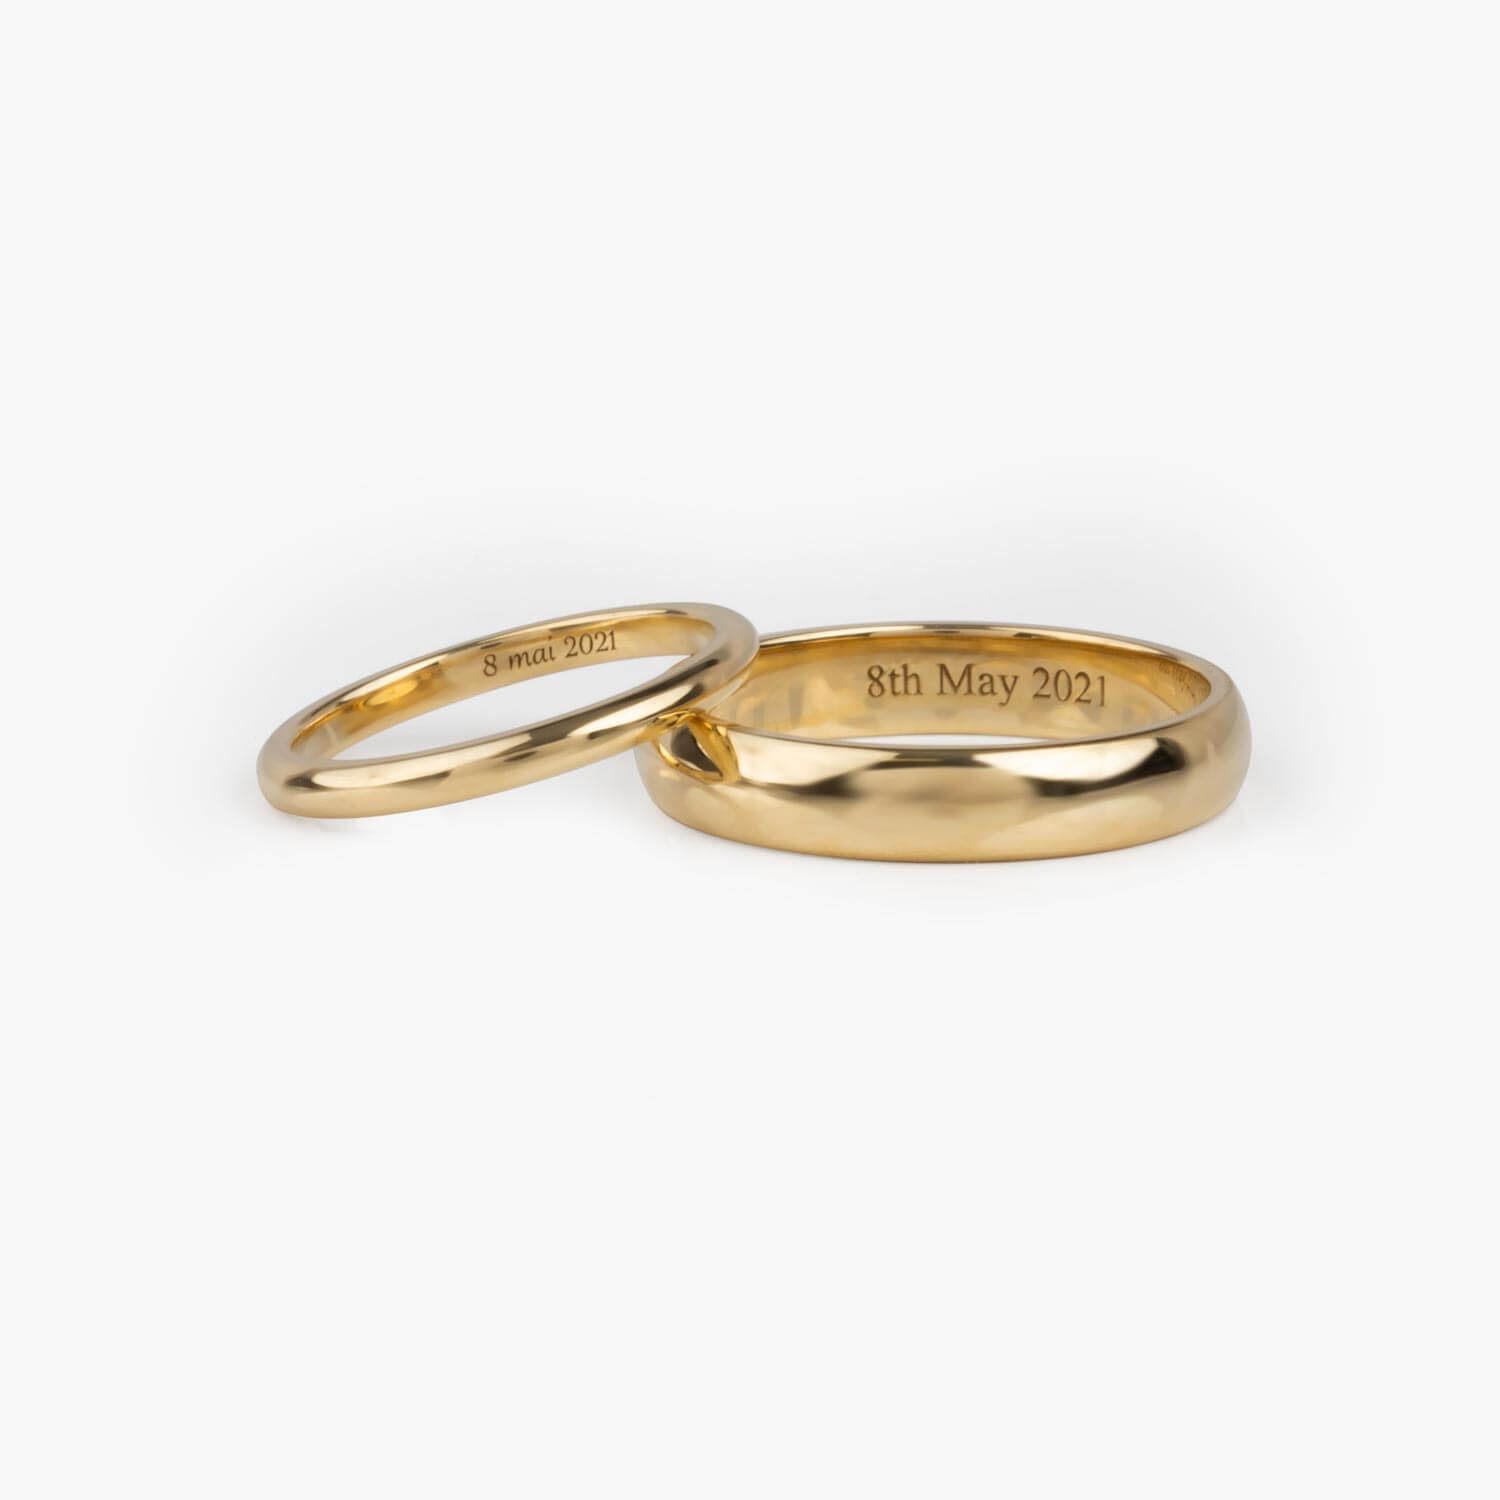 Bespoke Yellow Gold Matching Wedding Rings